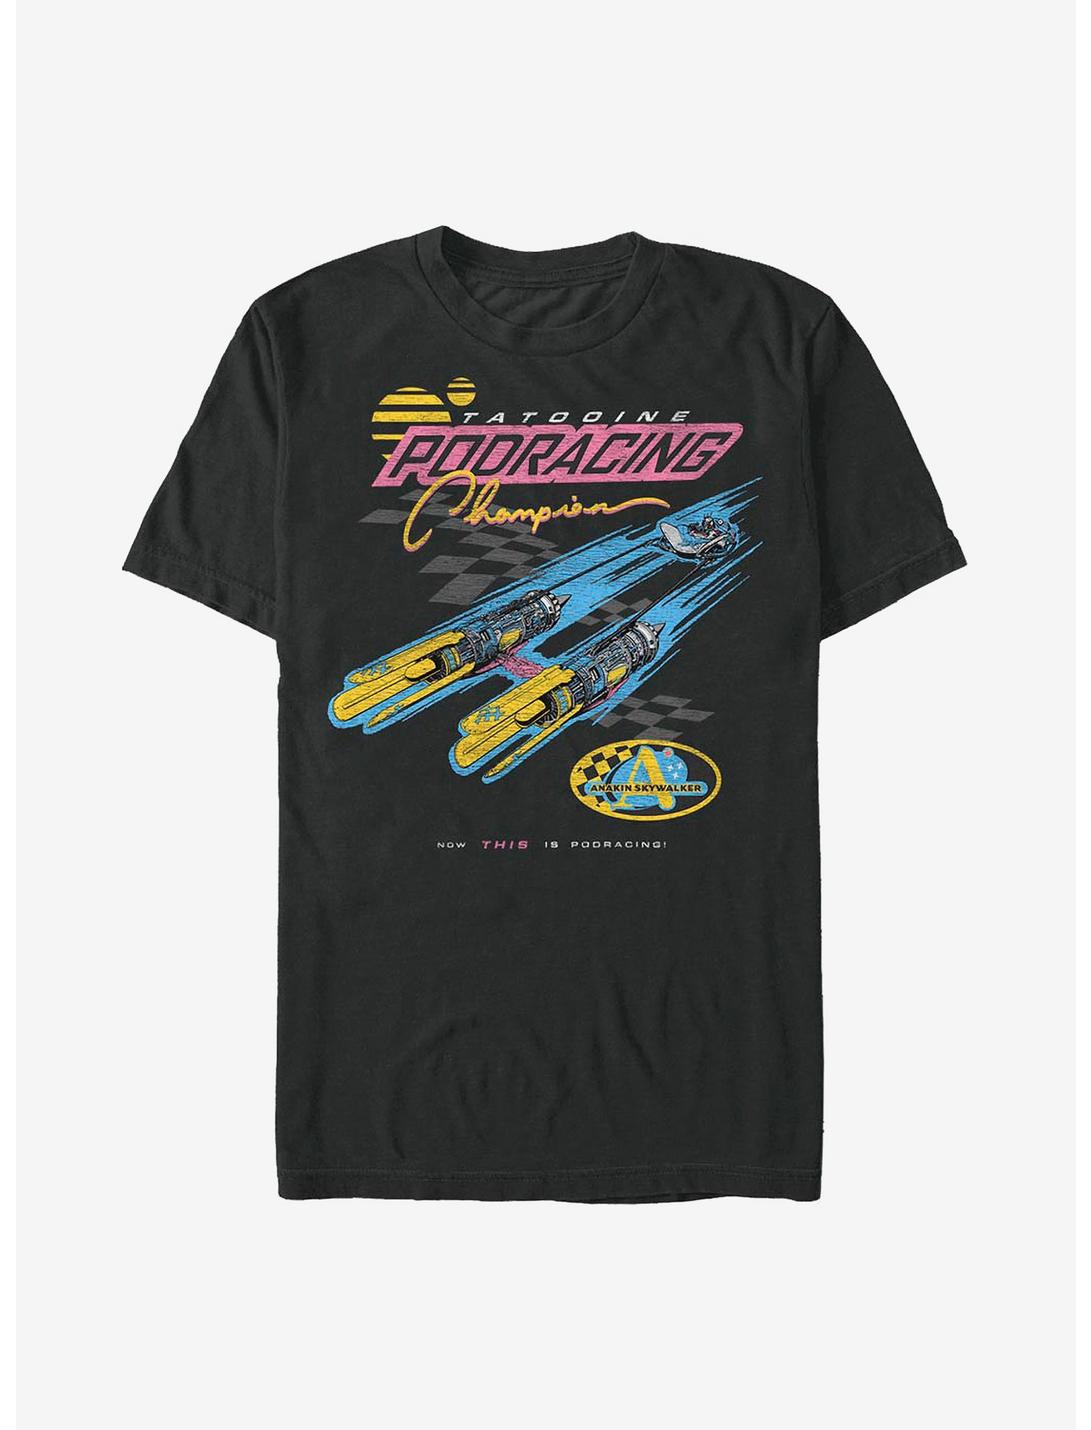 Star Wars Championship Tee T-Shirt, , hi-res